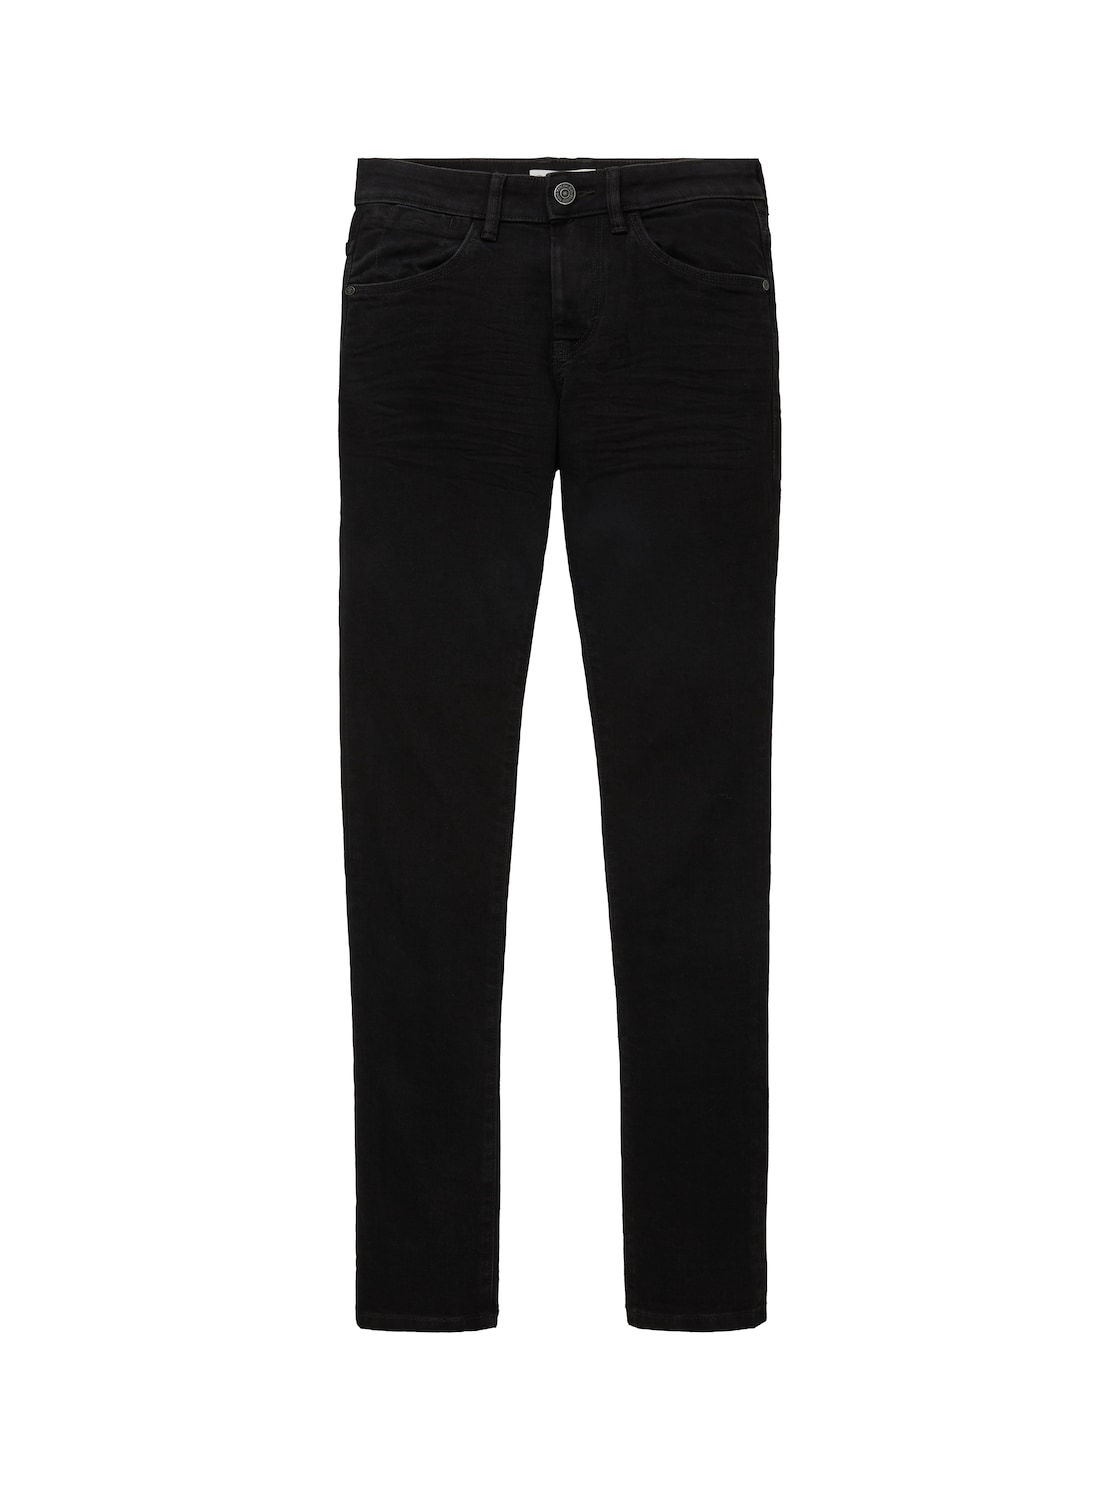 TOM TAILOR Herren Troy Slim Jeans, schwarz, Logo Print, Gr. 30/30 von Tom Tailor